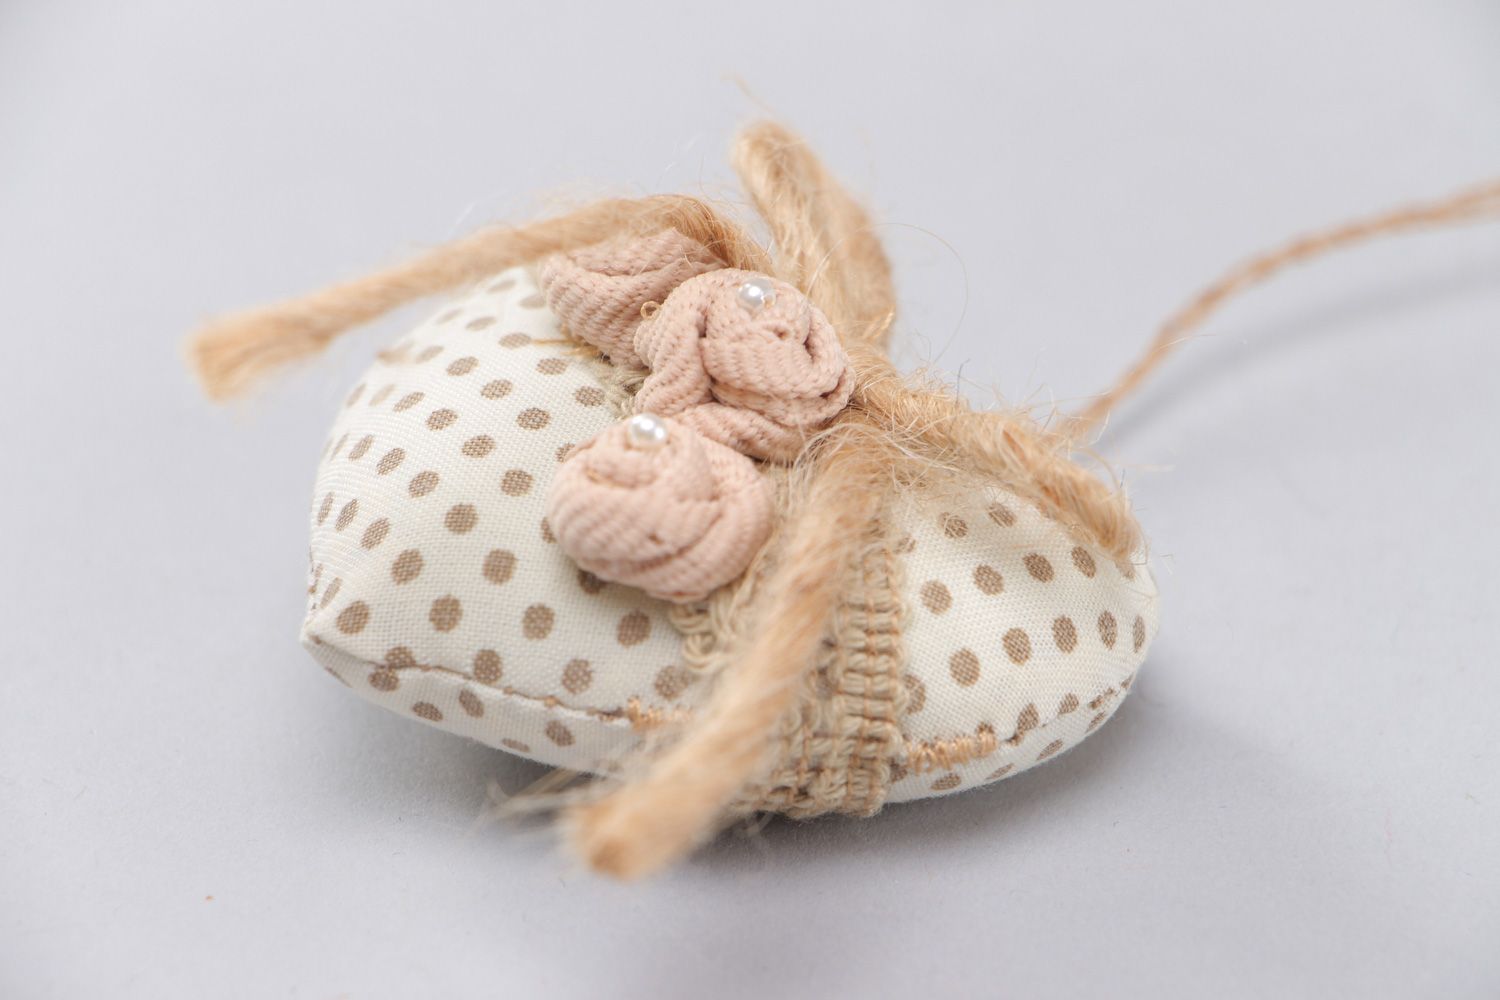 Handmade interior pendant polka dot fabric heart with flowers and eyelet photo 2